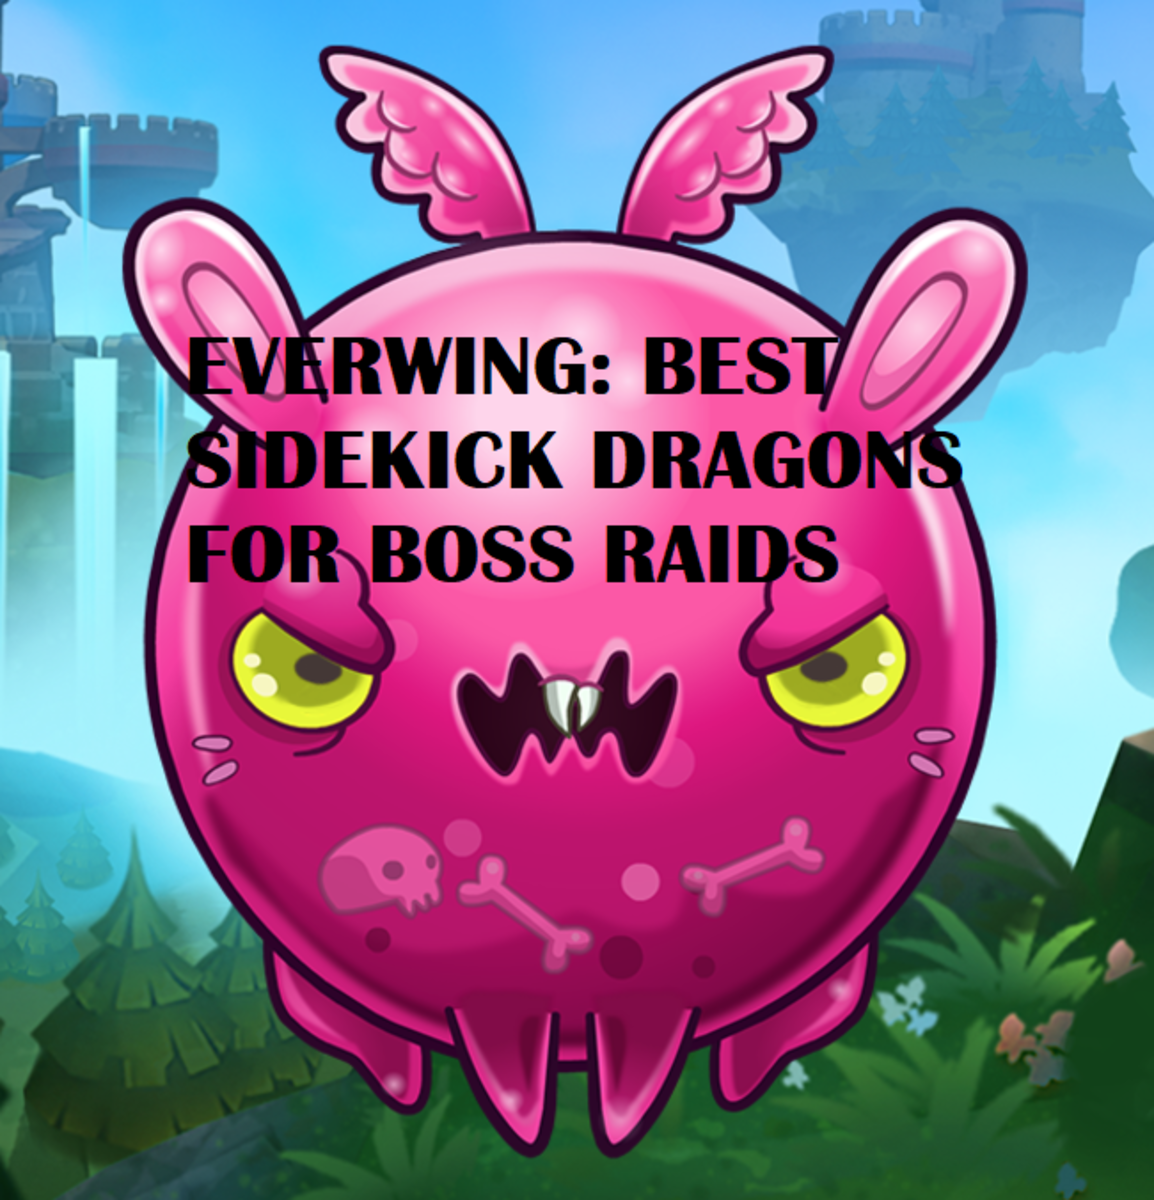 "EverWing": Best sidekick dragons for boss raids